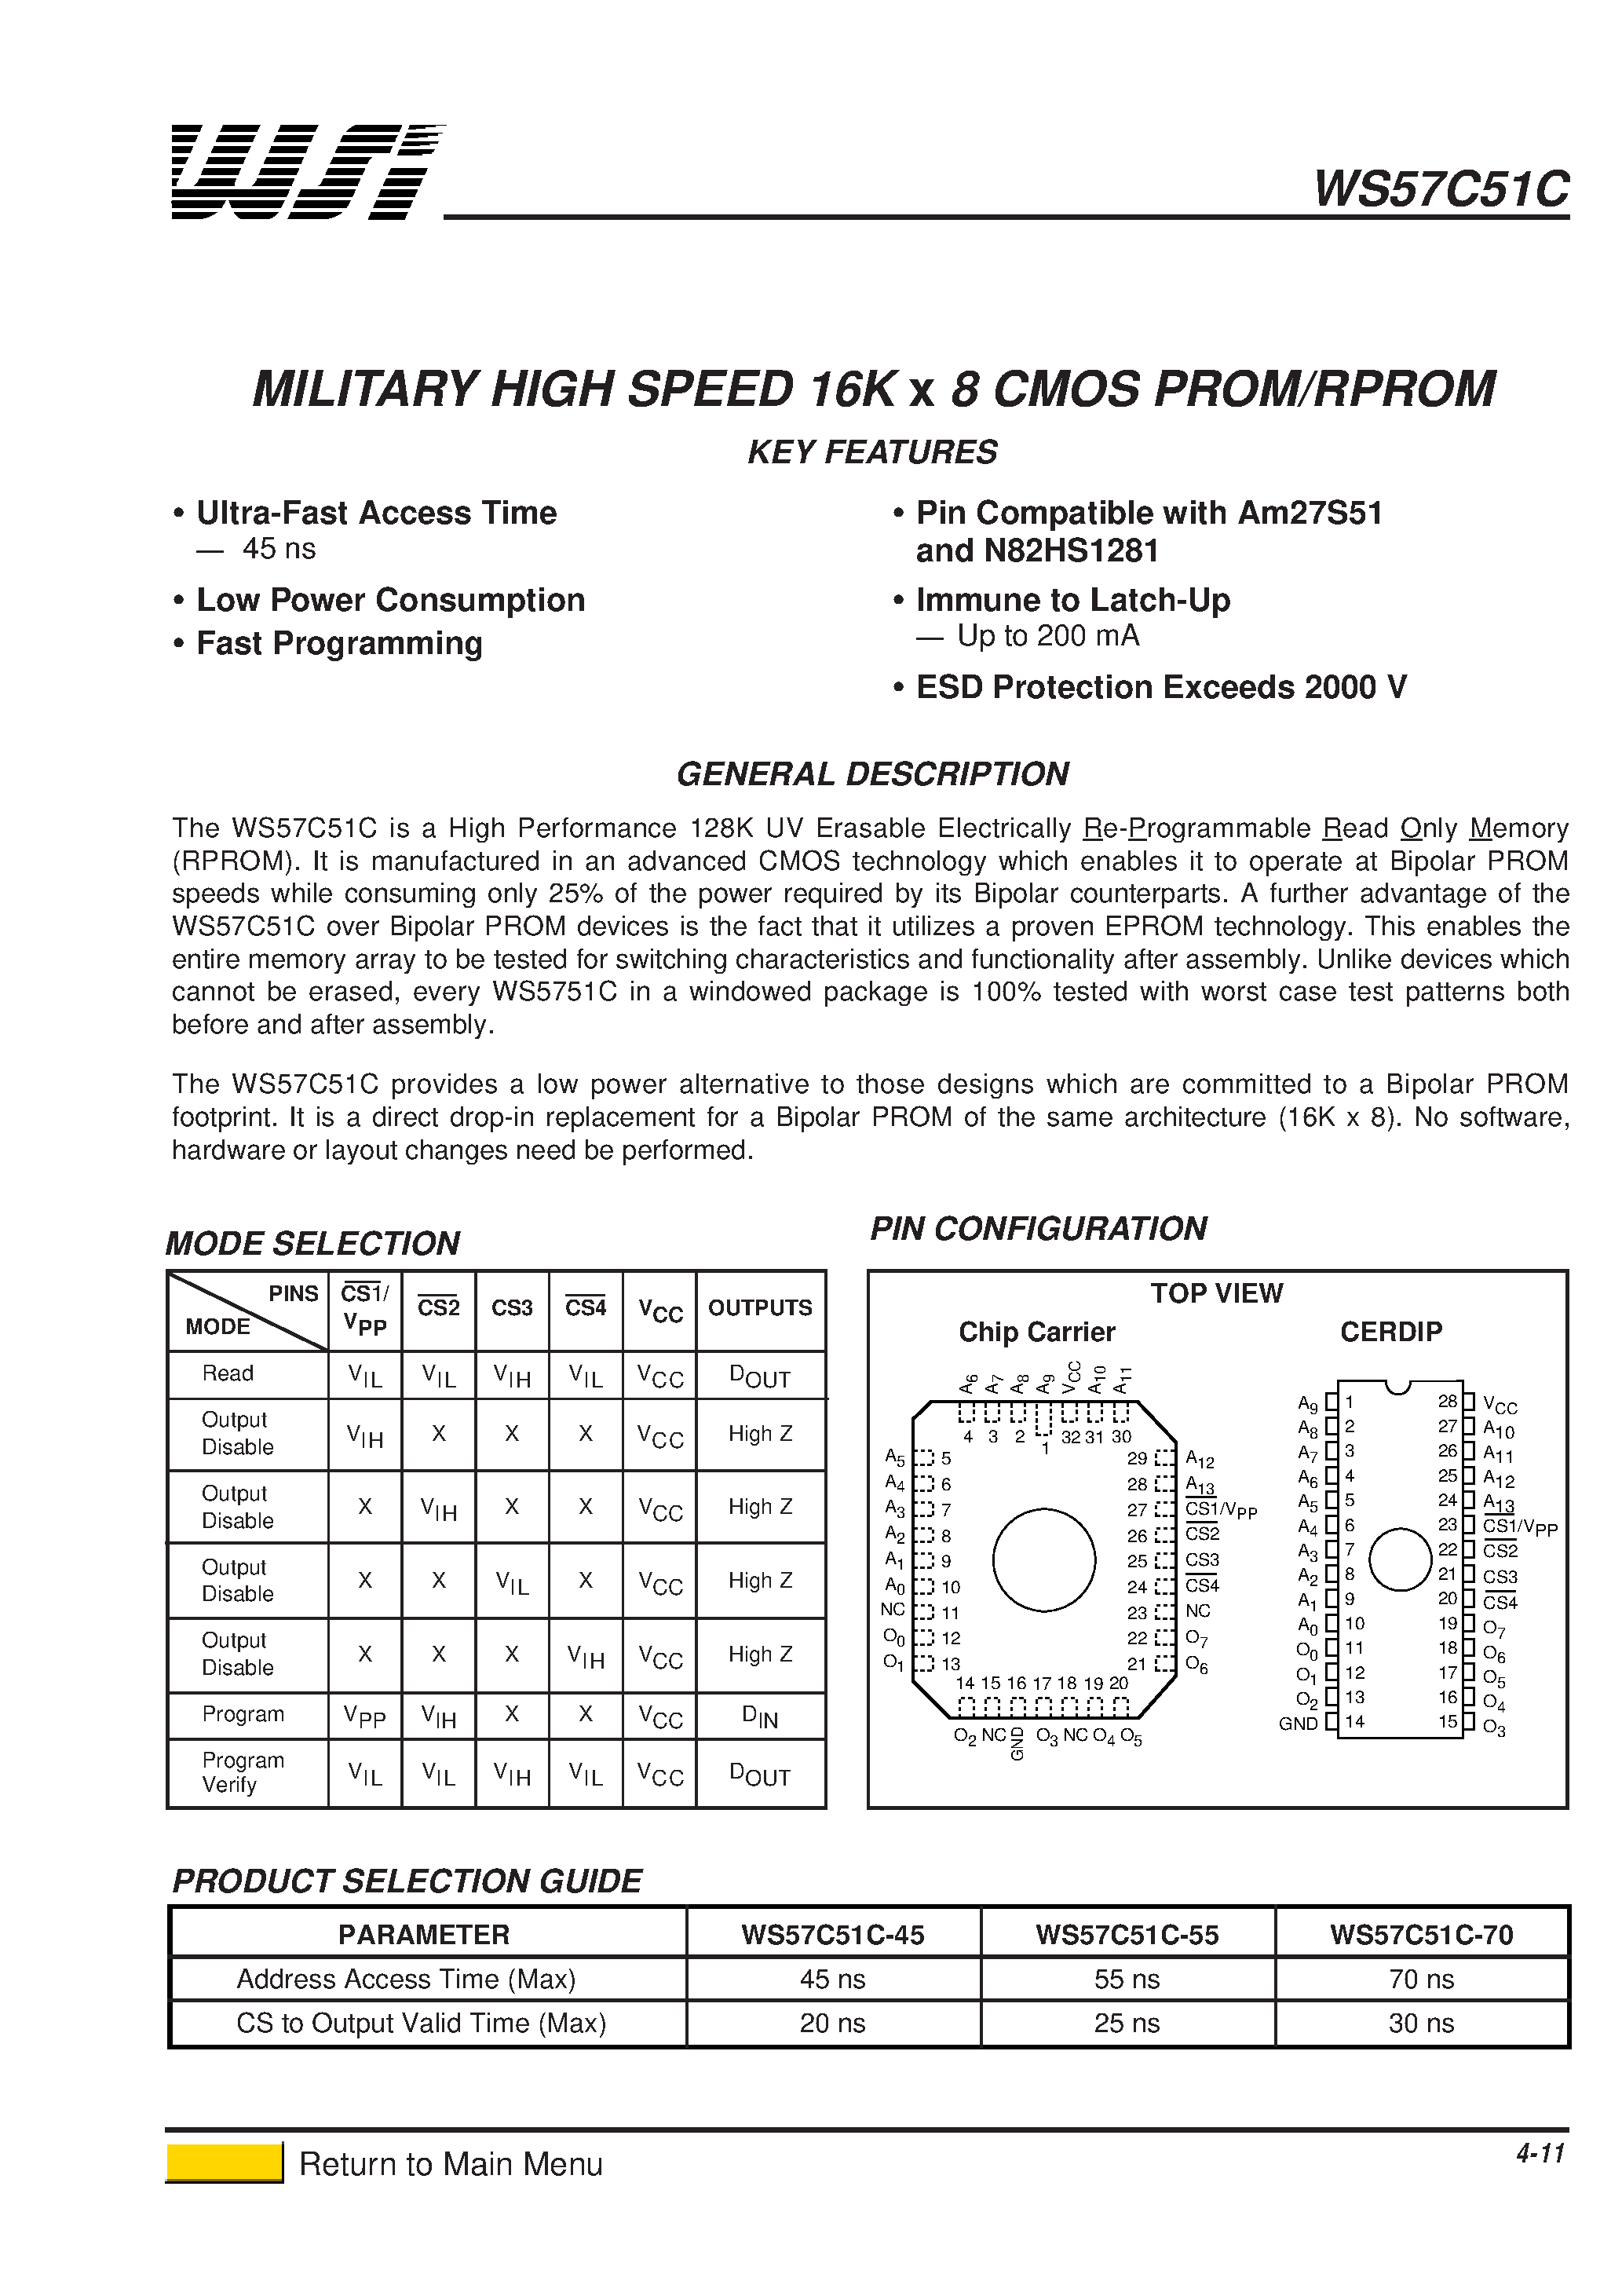 Datasheet WS57C51C-55 - MILITARY HIGH SPEED 16K x 8 CMOS PROM/RPROM page 1